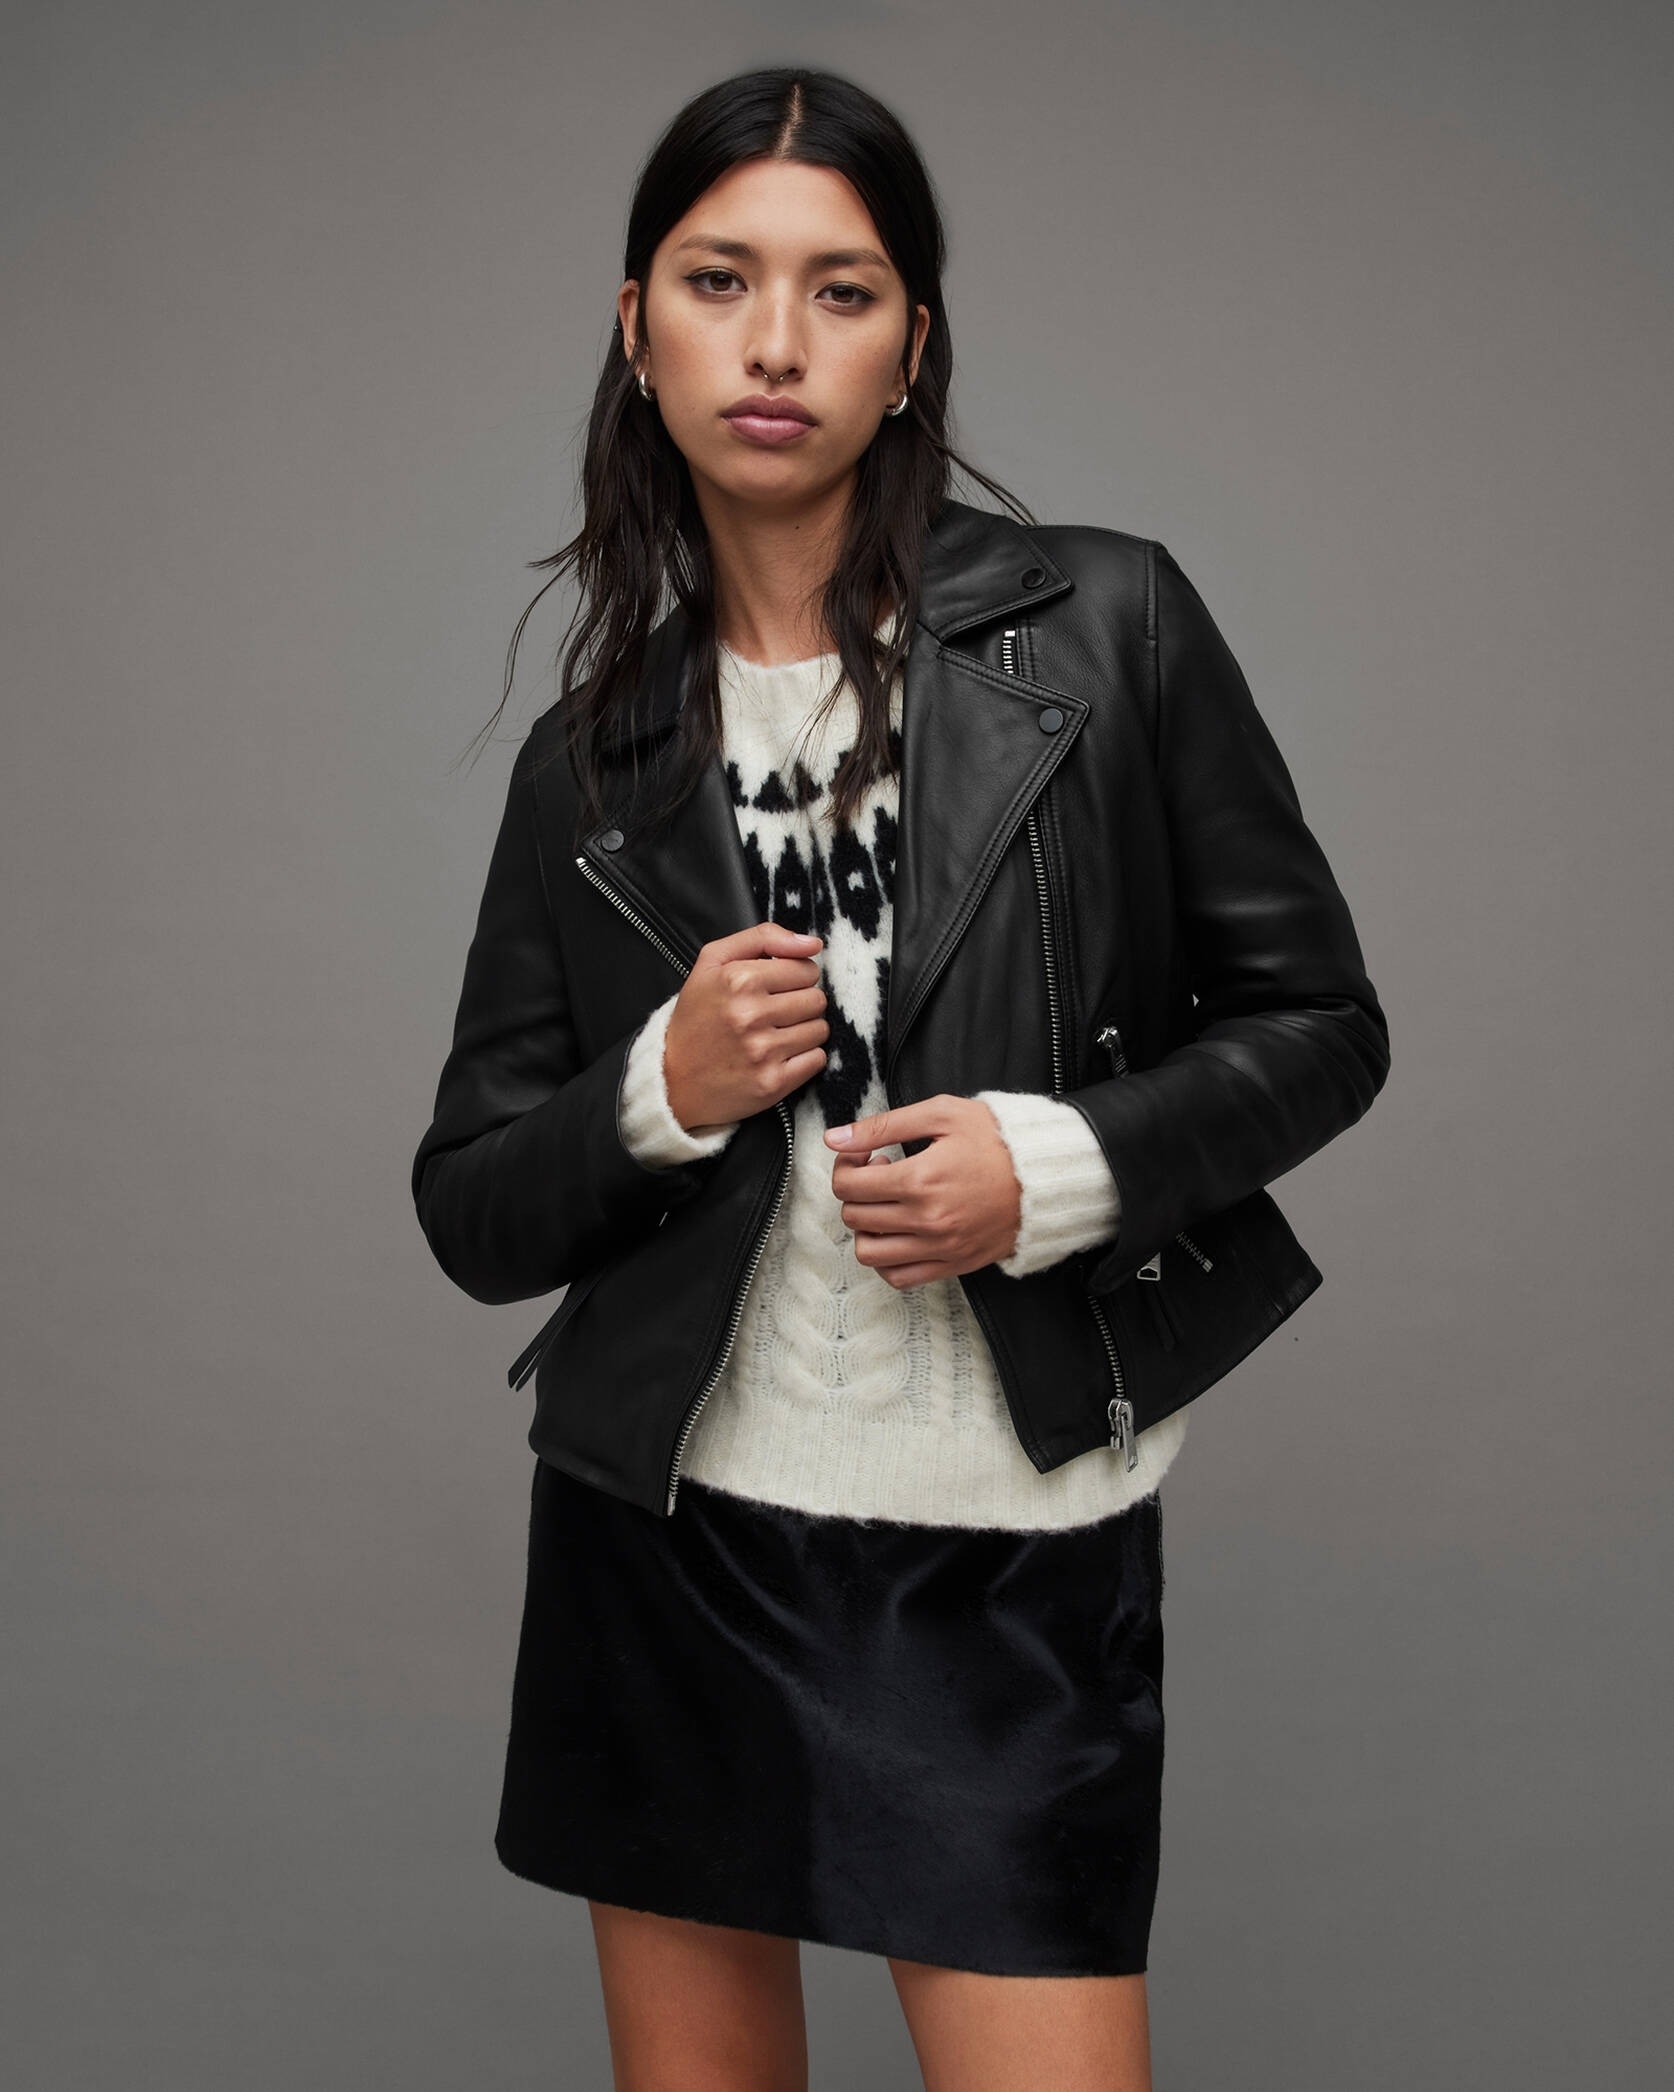 model in leather jacket